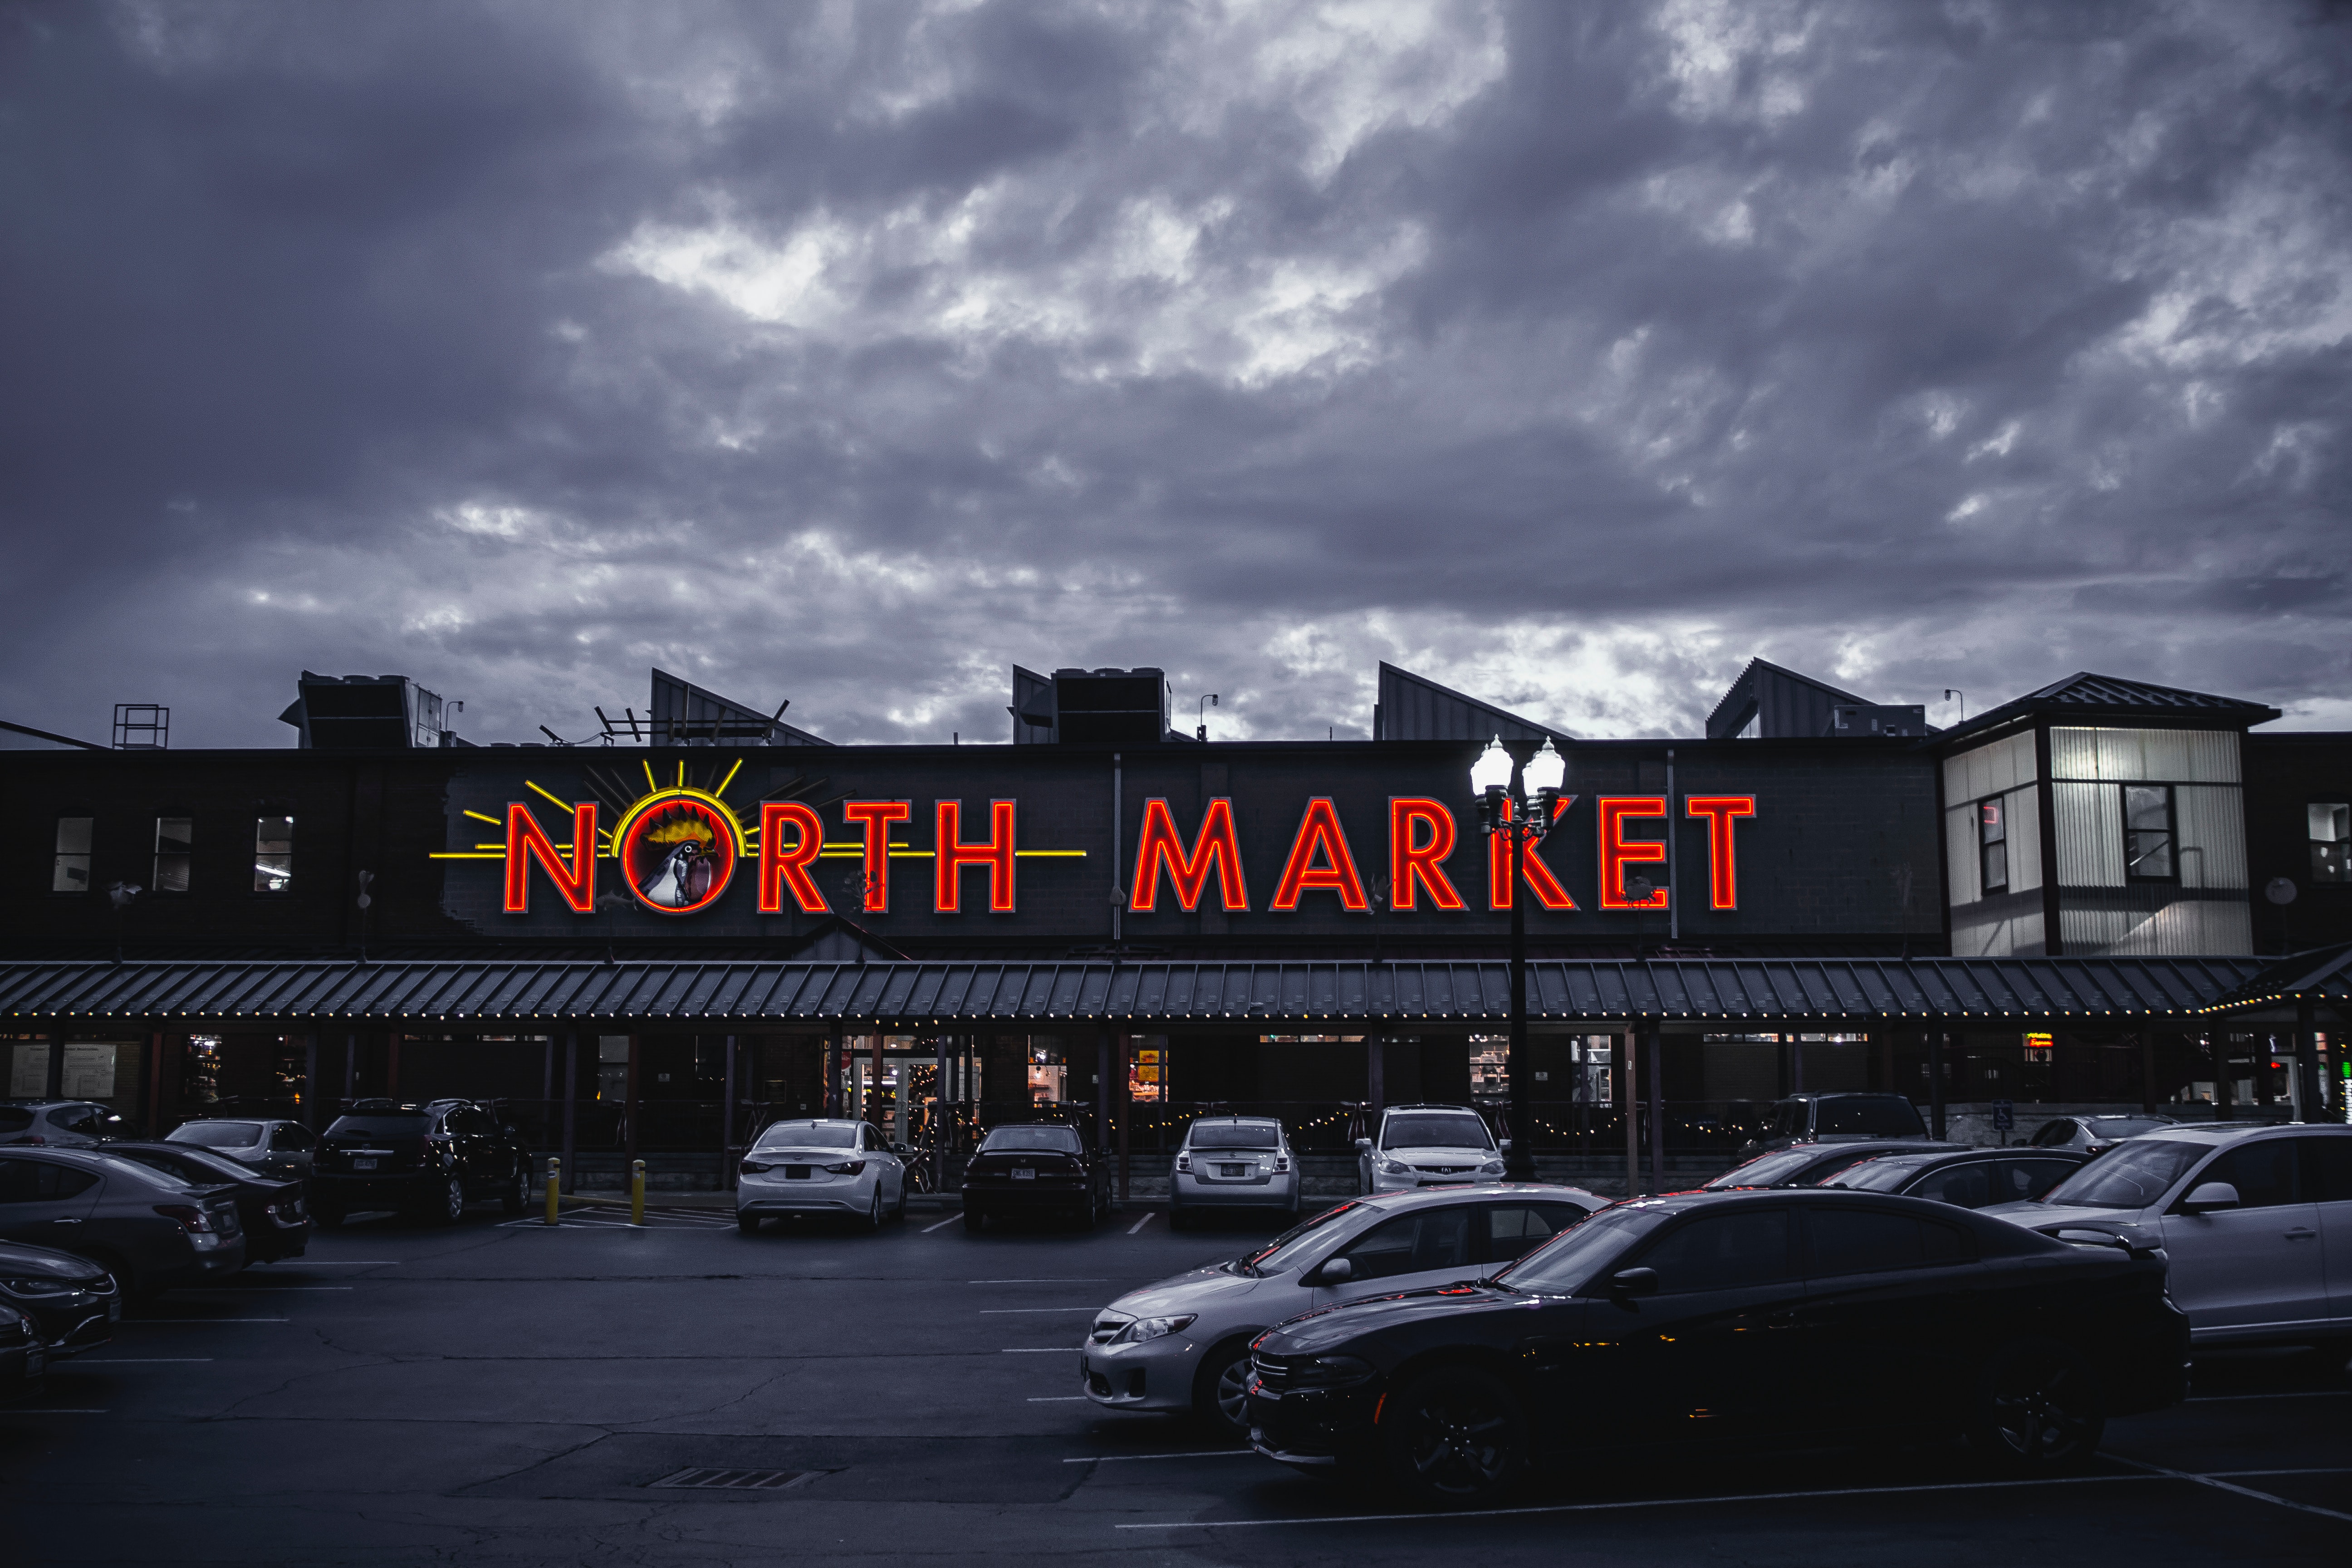 North market signage building under gray sky photo